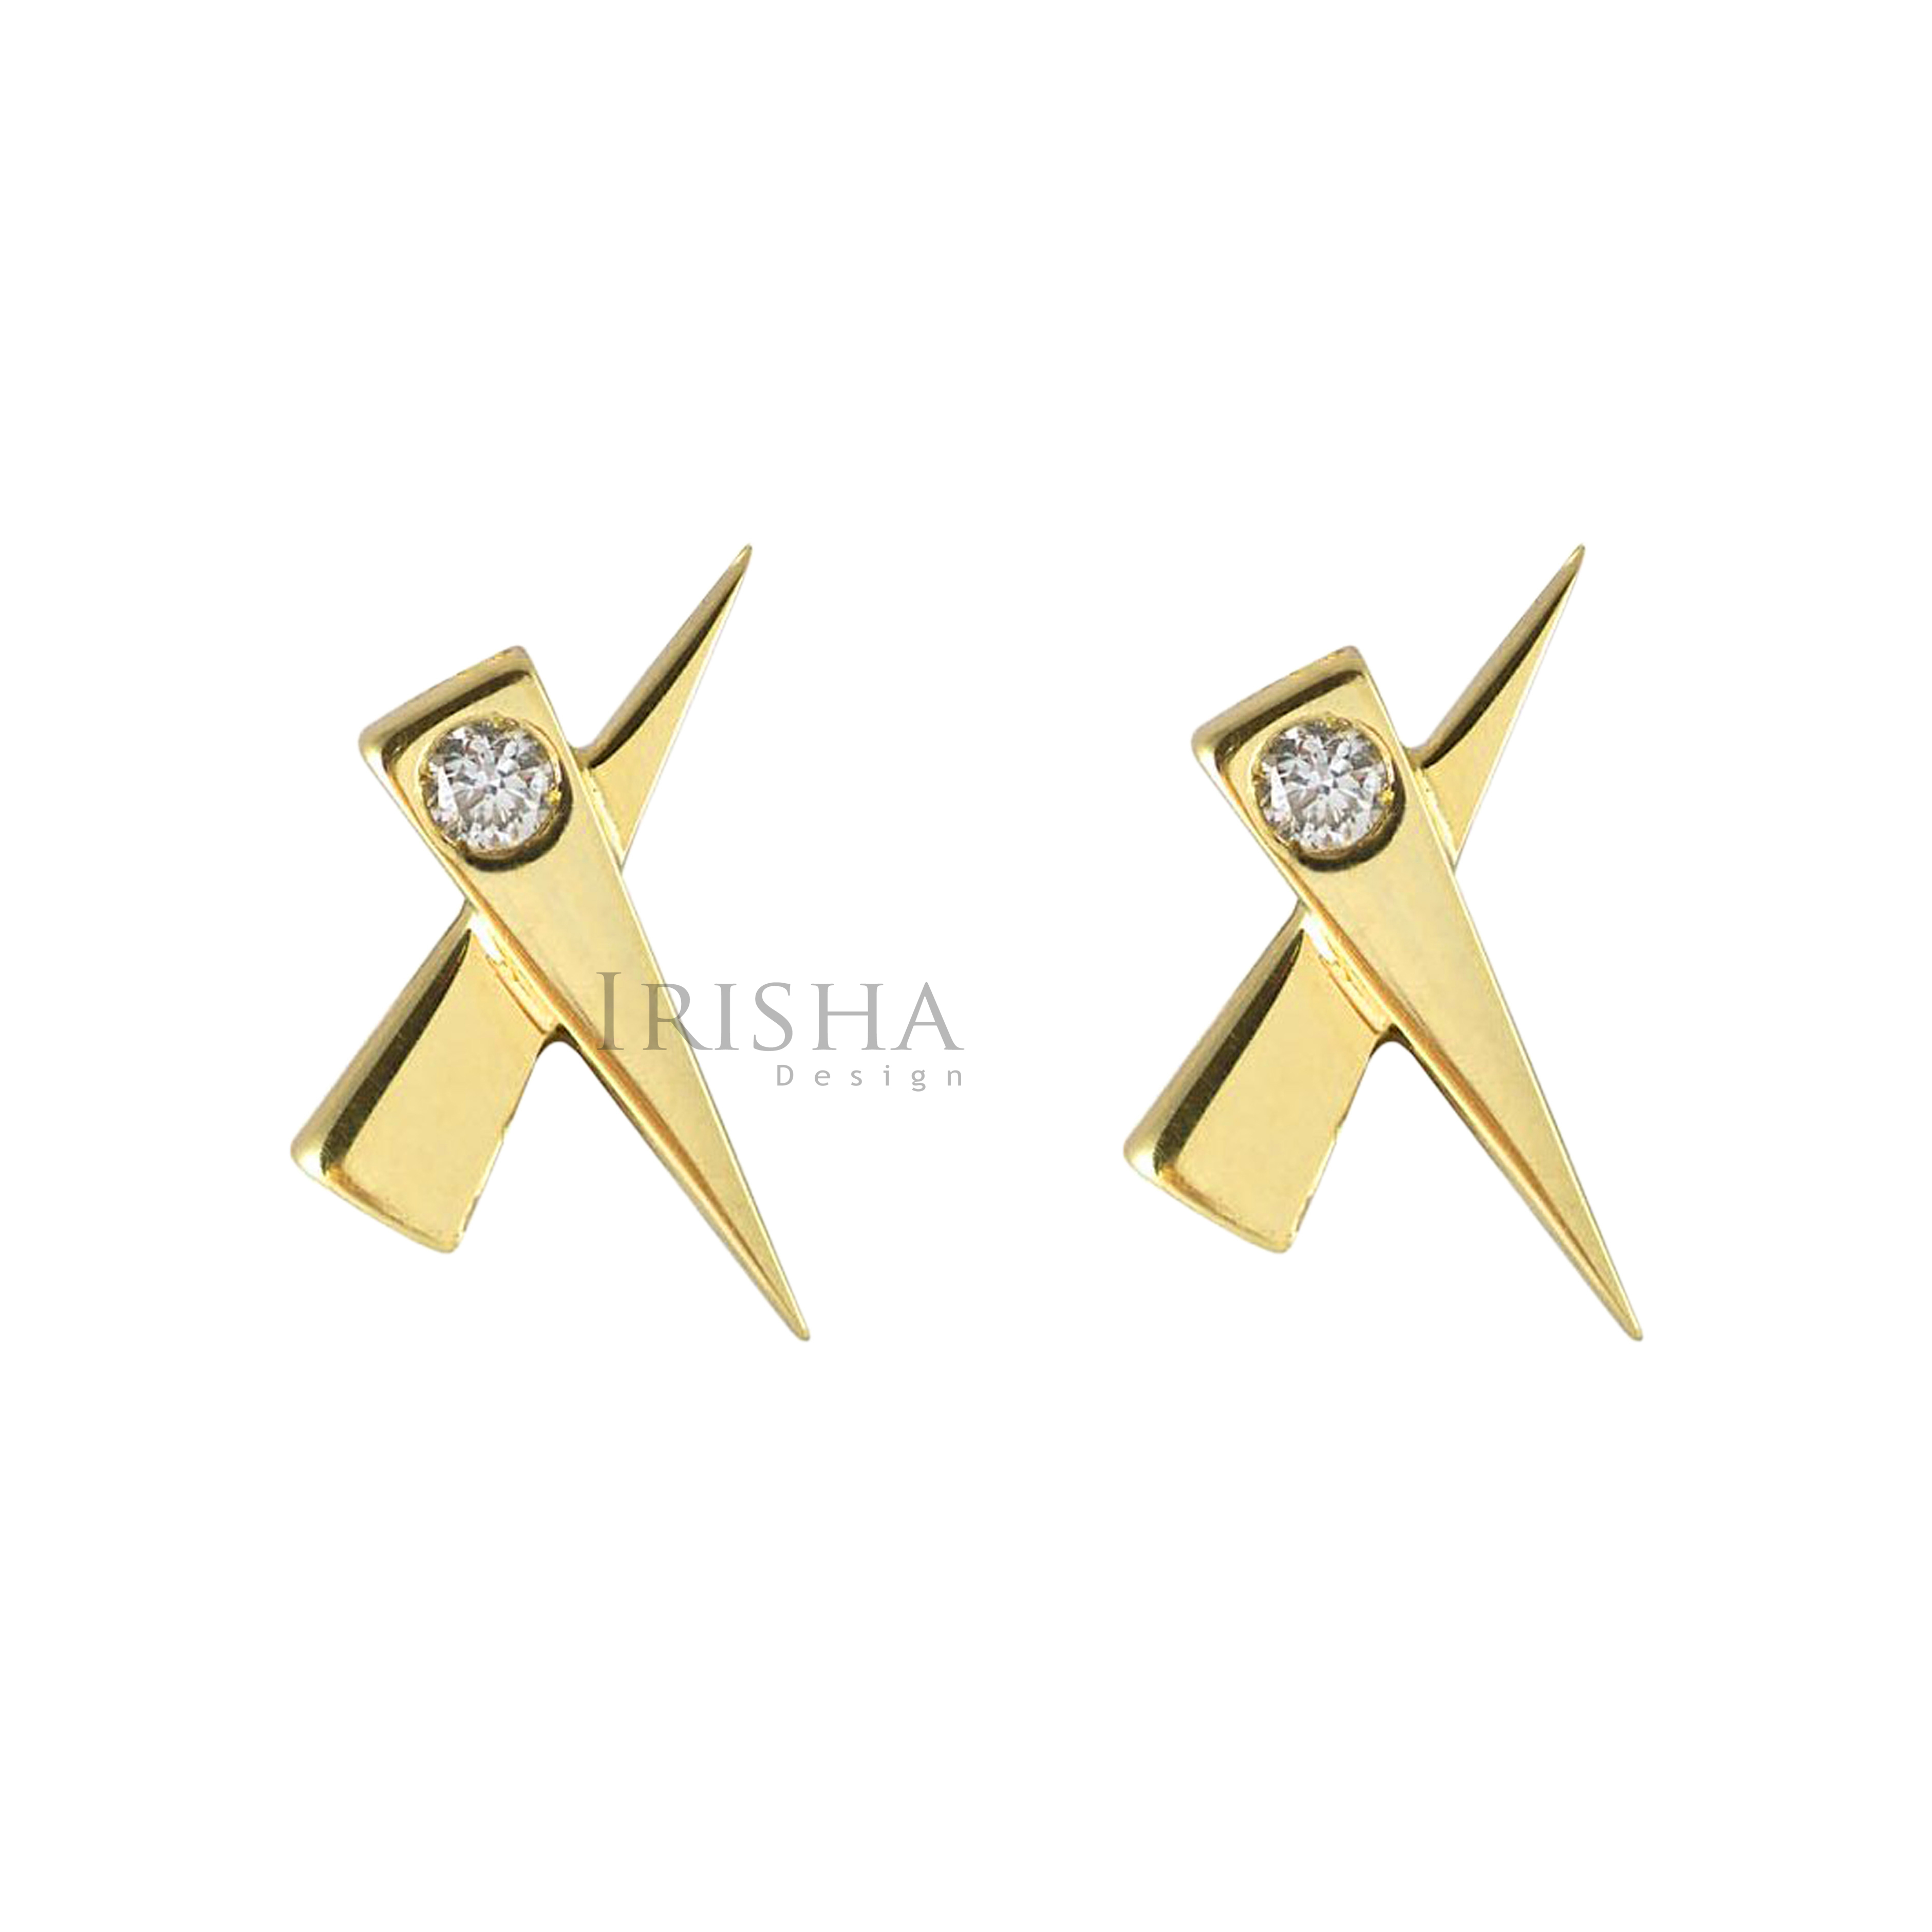 14K Gold 0.04 Ct. Genuine Diamond Kiss Studs Earrings Fine Jewelry - New Arrival